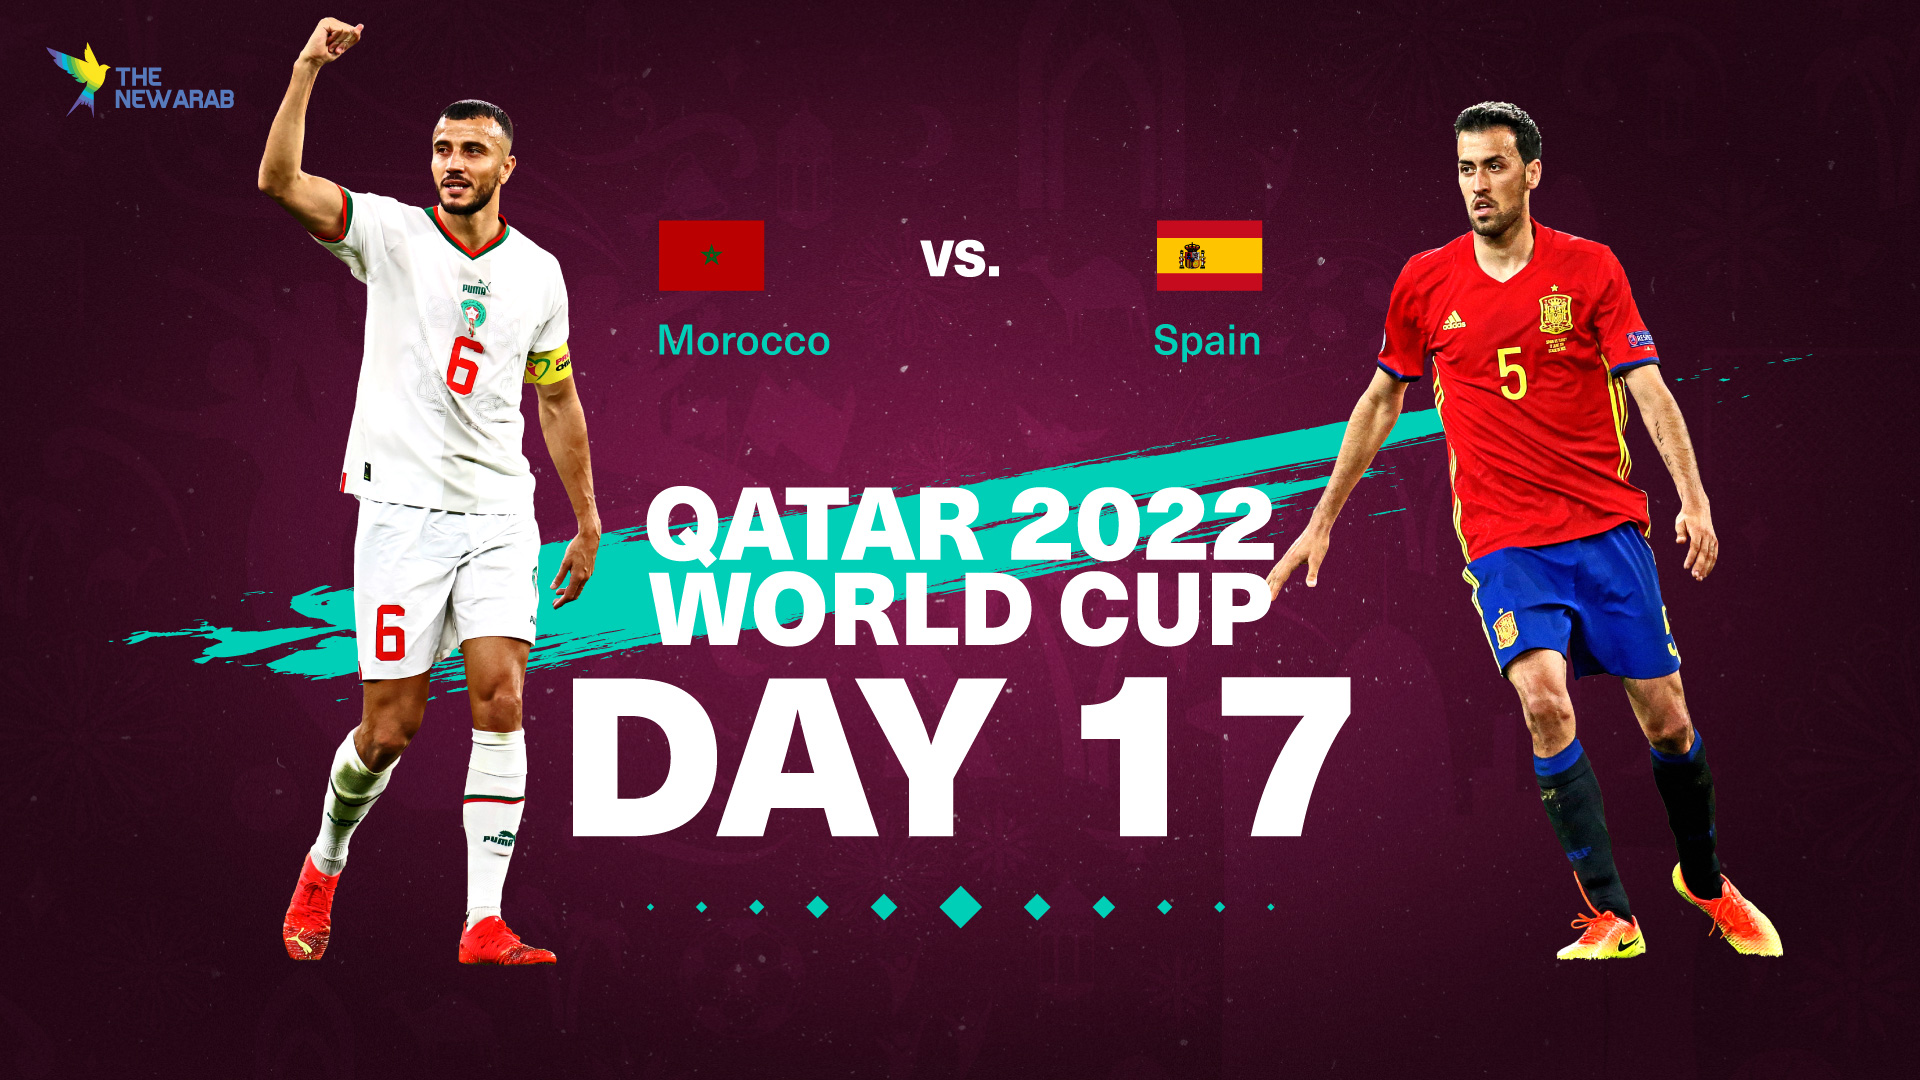 Day 17: Morocco beats Spain on penalties